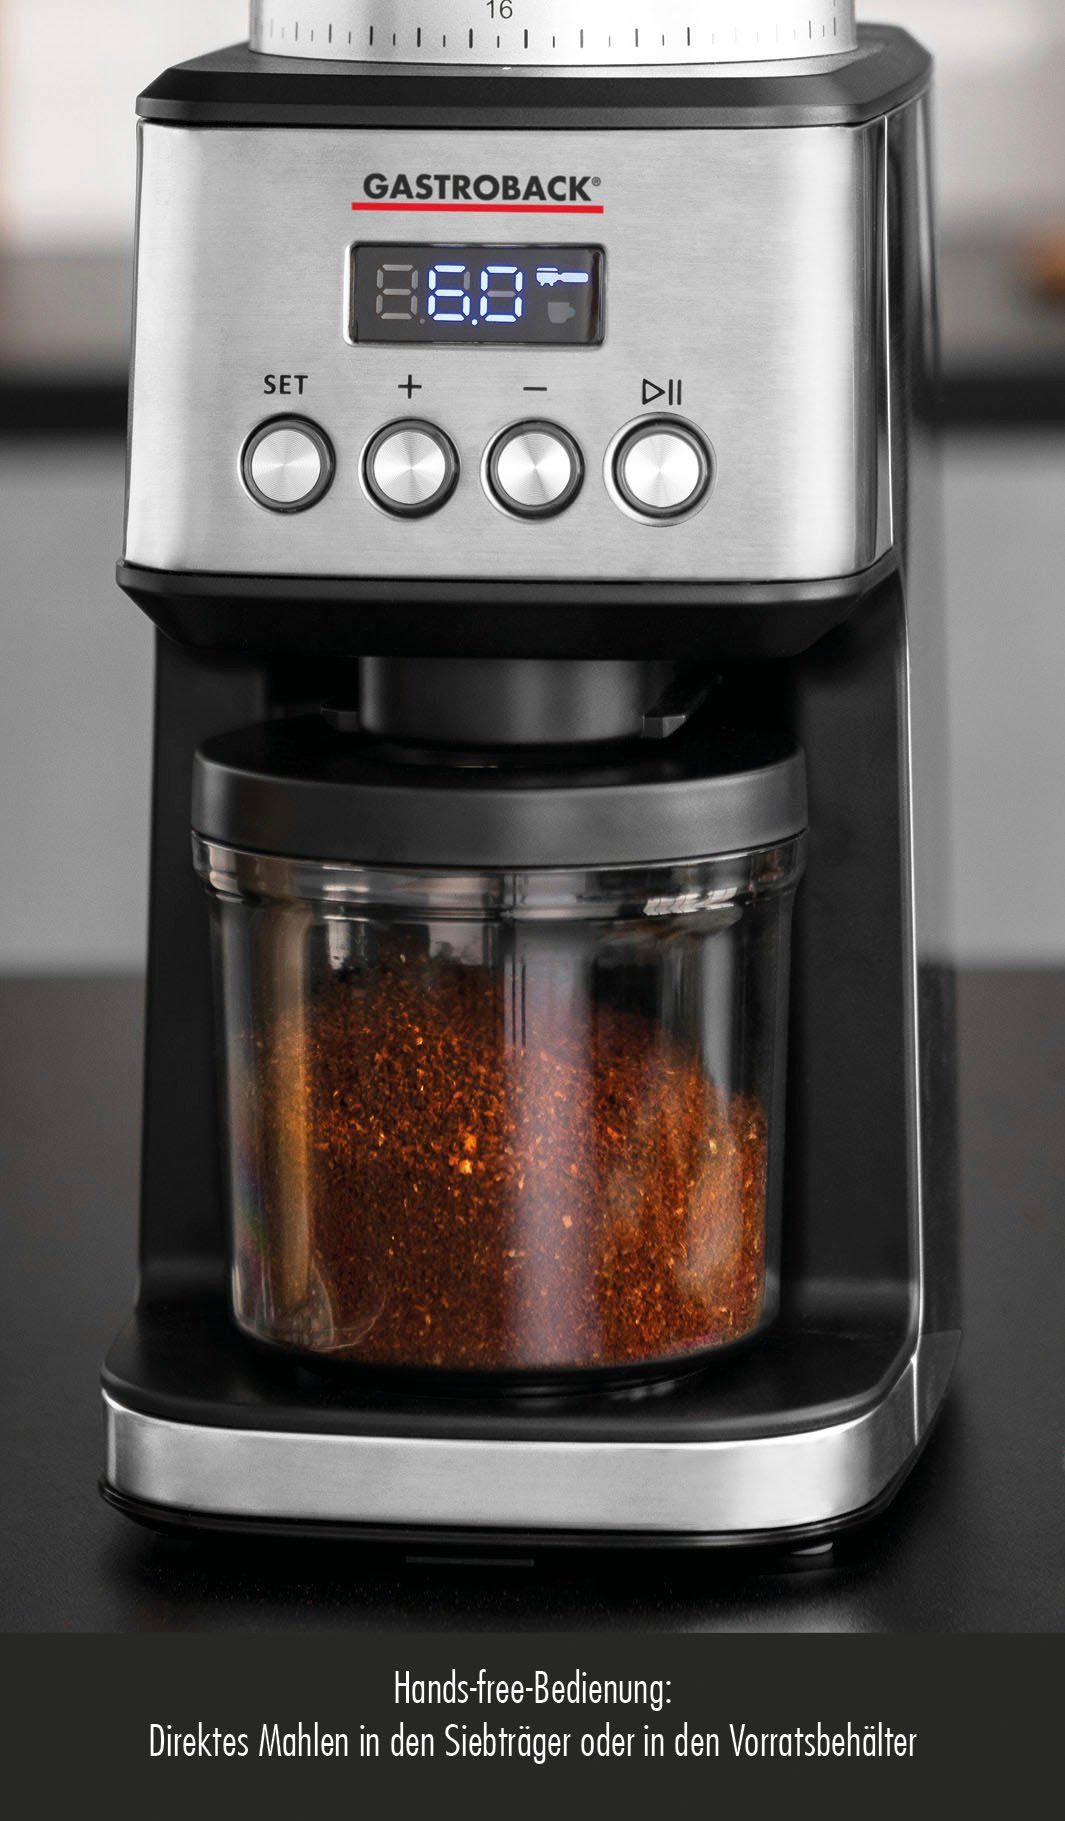 180 Kegelmahlwerk, Bohnenbehälter W, Digital, 320 g 42643 Kaffeemühle Gastroback Design